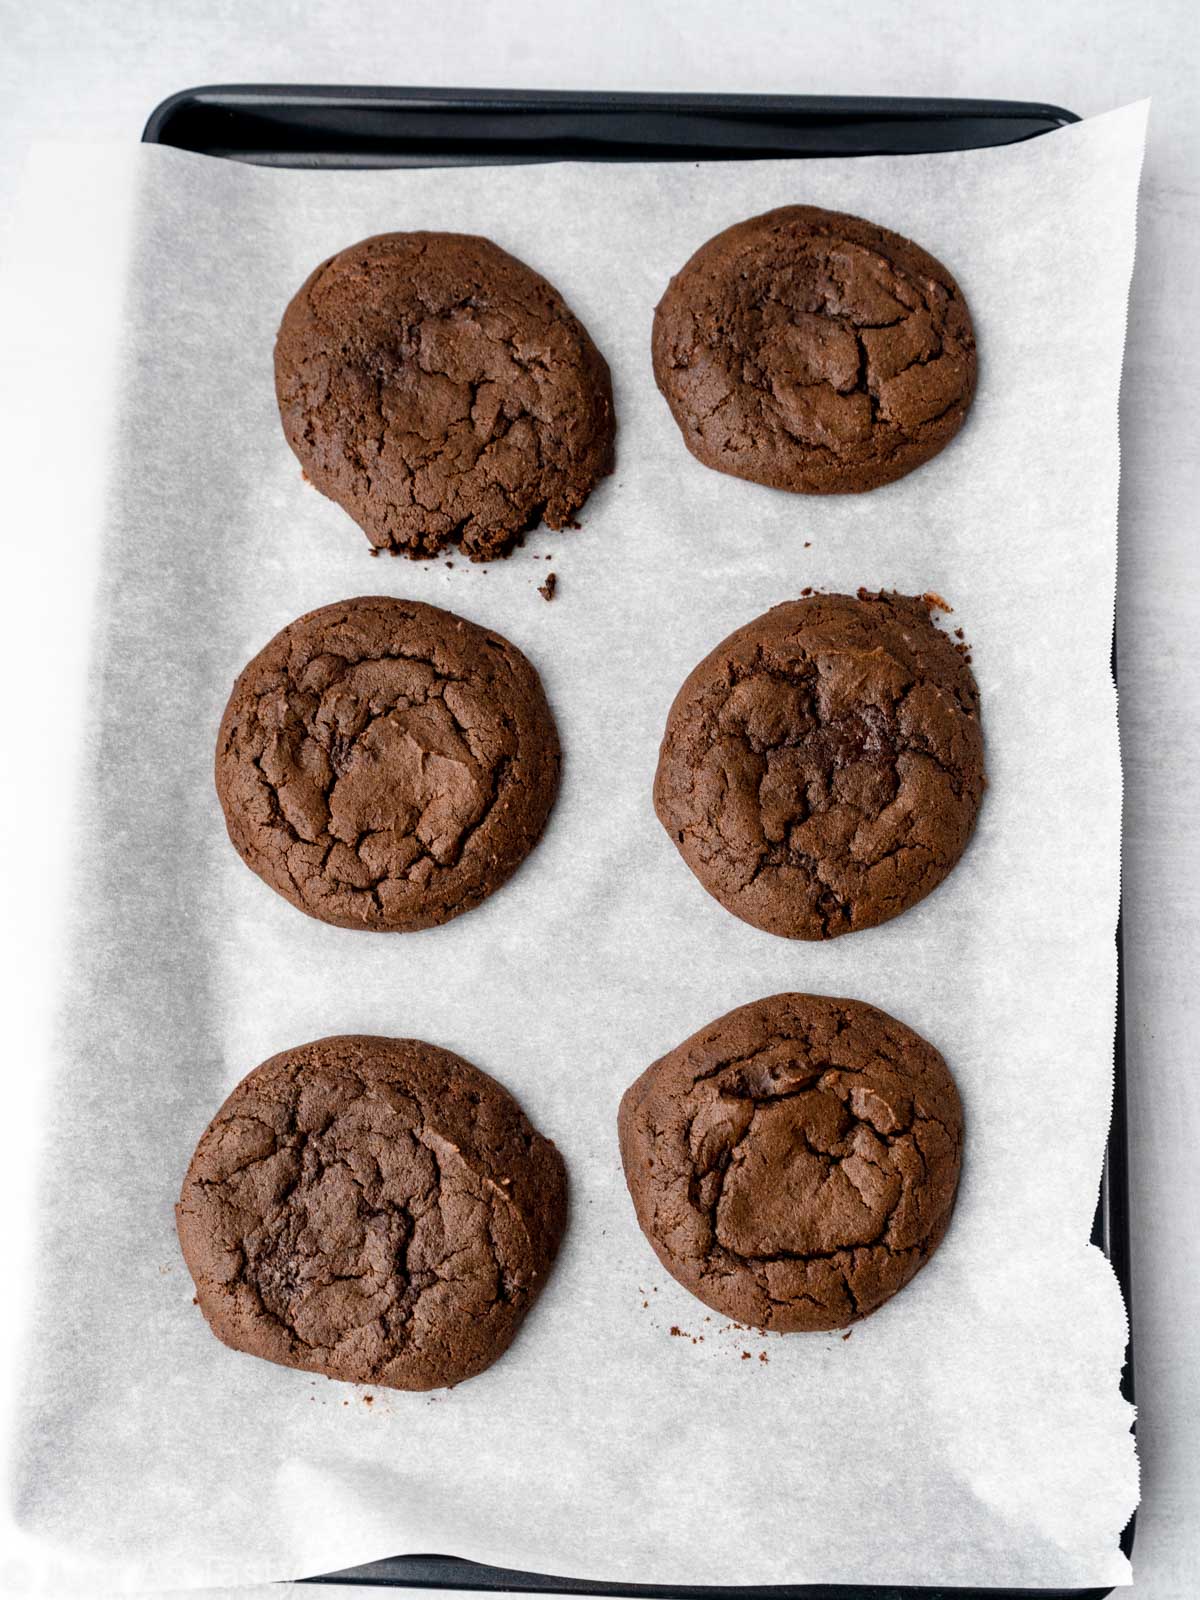 Chocolate whoopie pie cookies on a baking sheet.